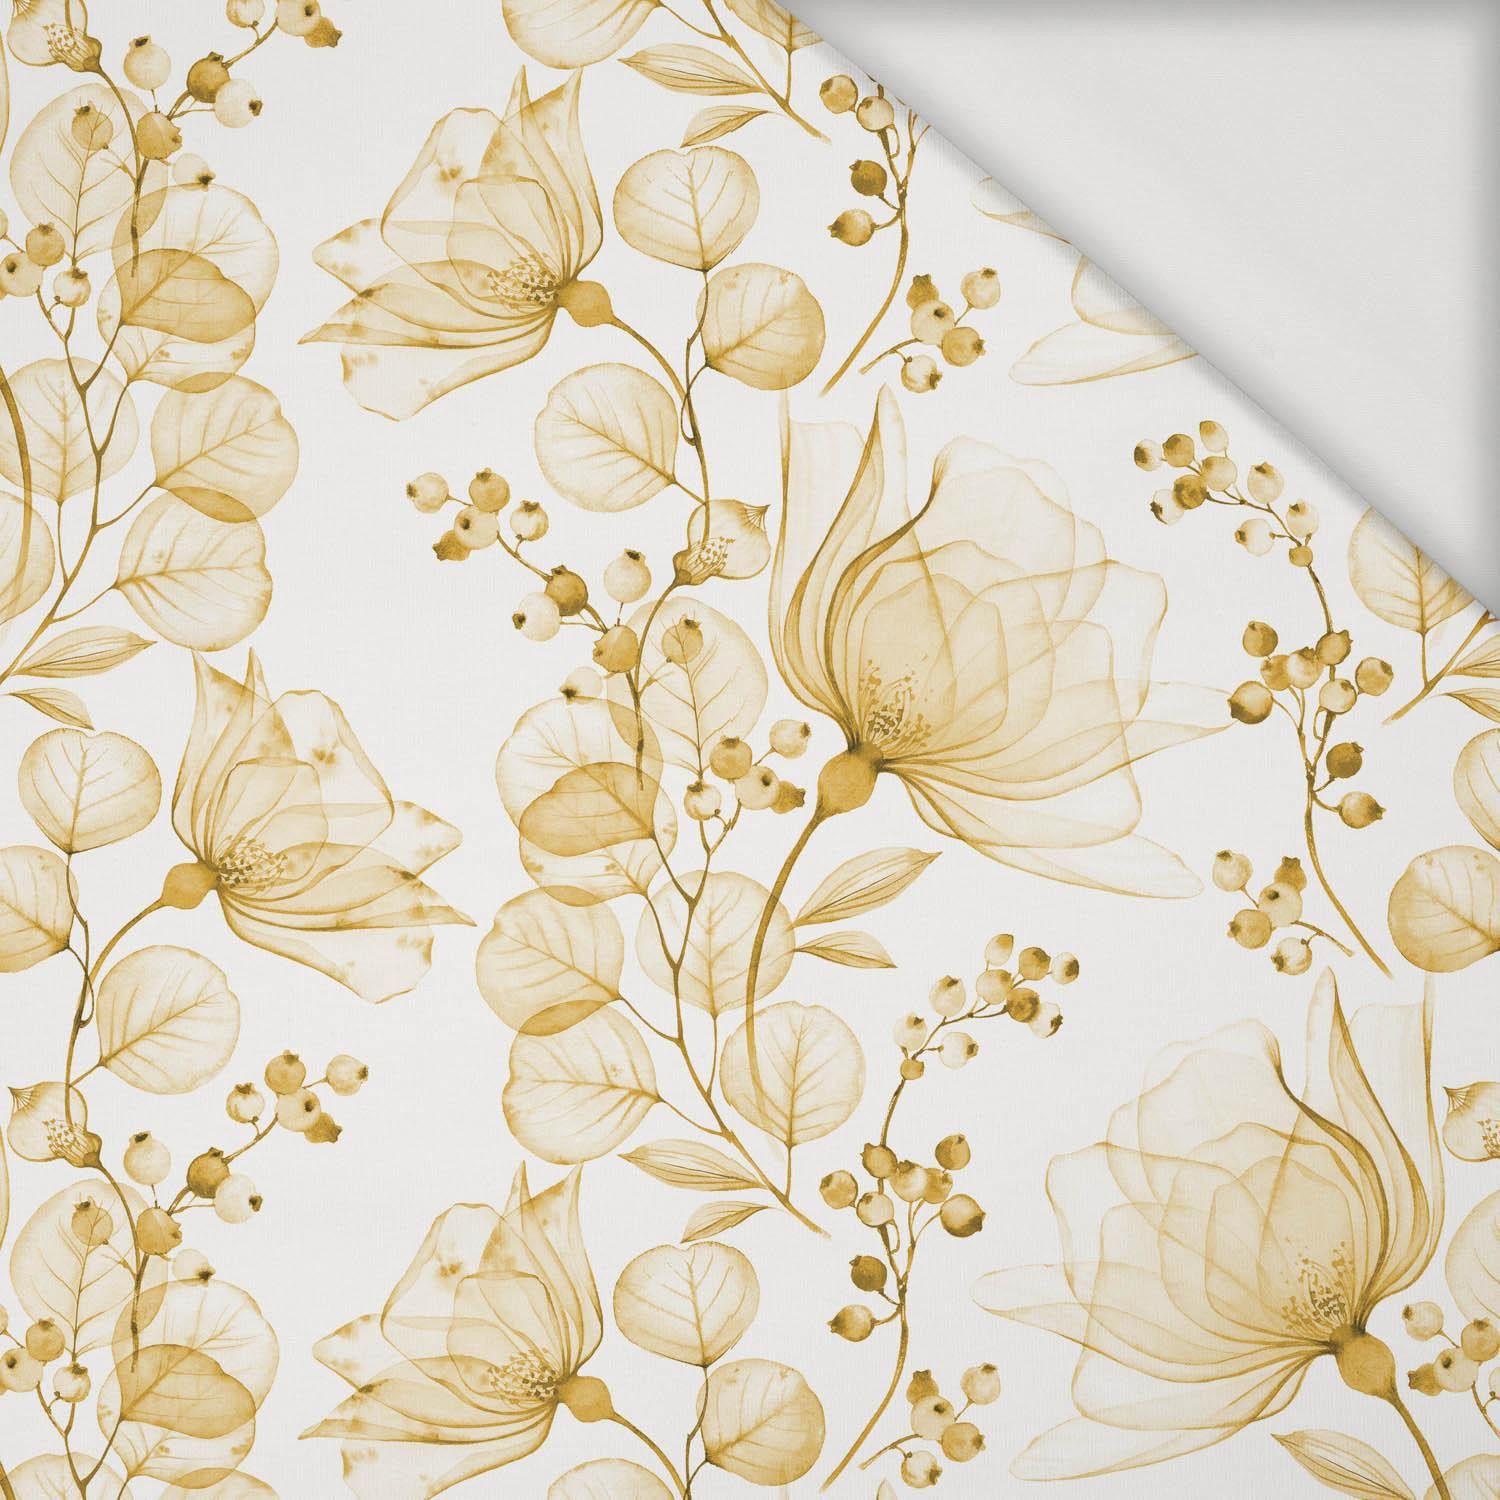 FLOWERS pattern no. 4 (gold) - Viscose jersey